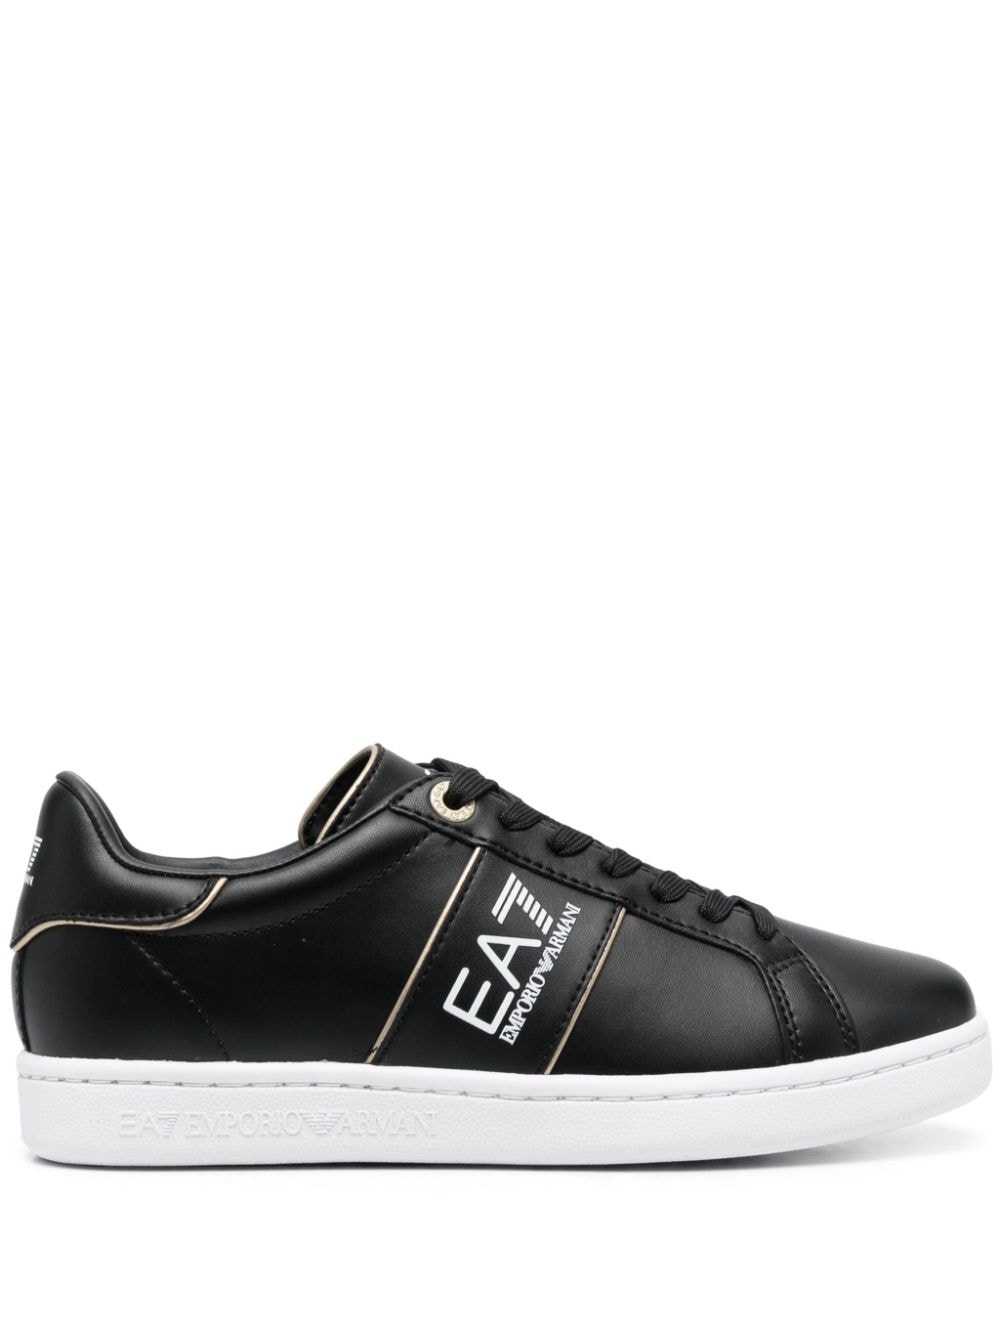 Ea7 Emporio Armani logo-print leather sneakers - Black von Ea7 Emporio Armani